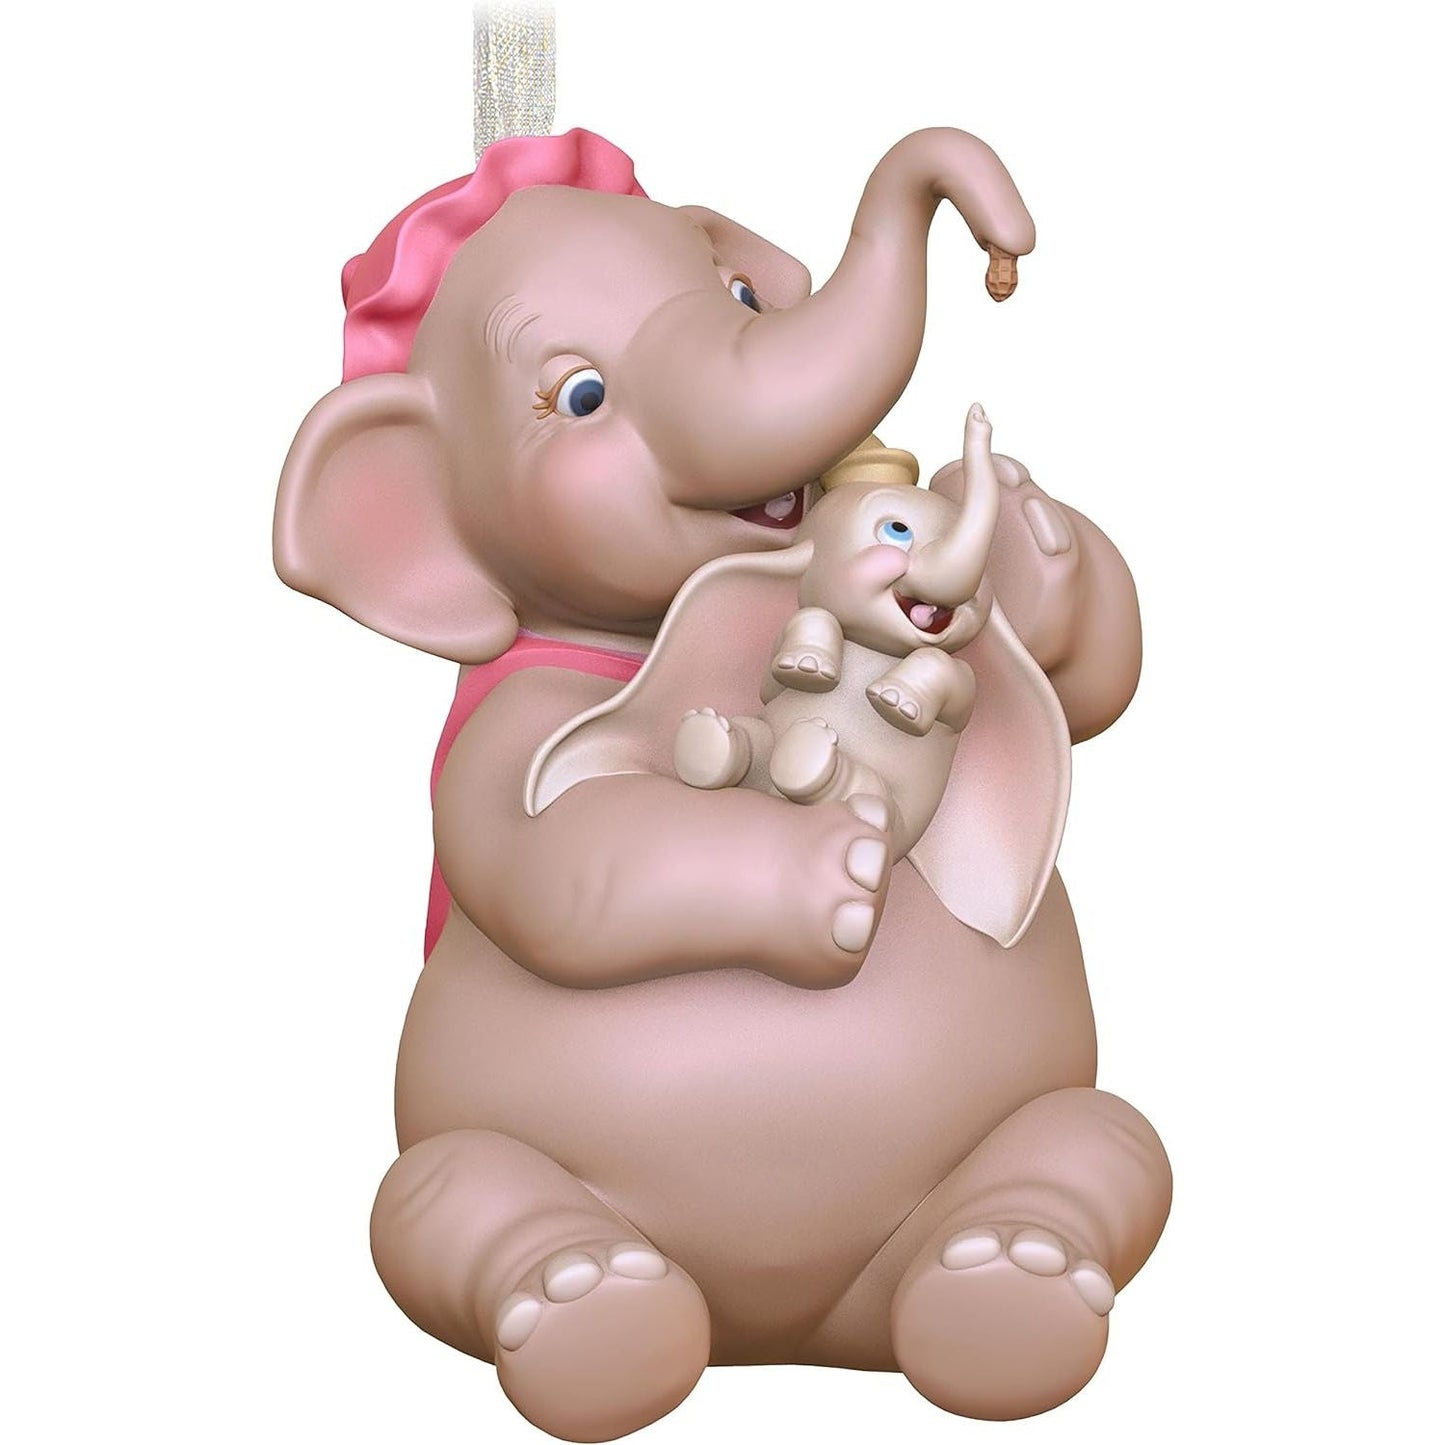 Disney Dumbo Mother and Child, 2021 Keepsake Ornament